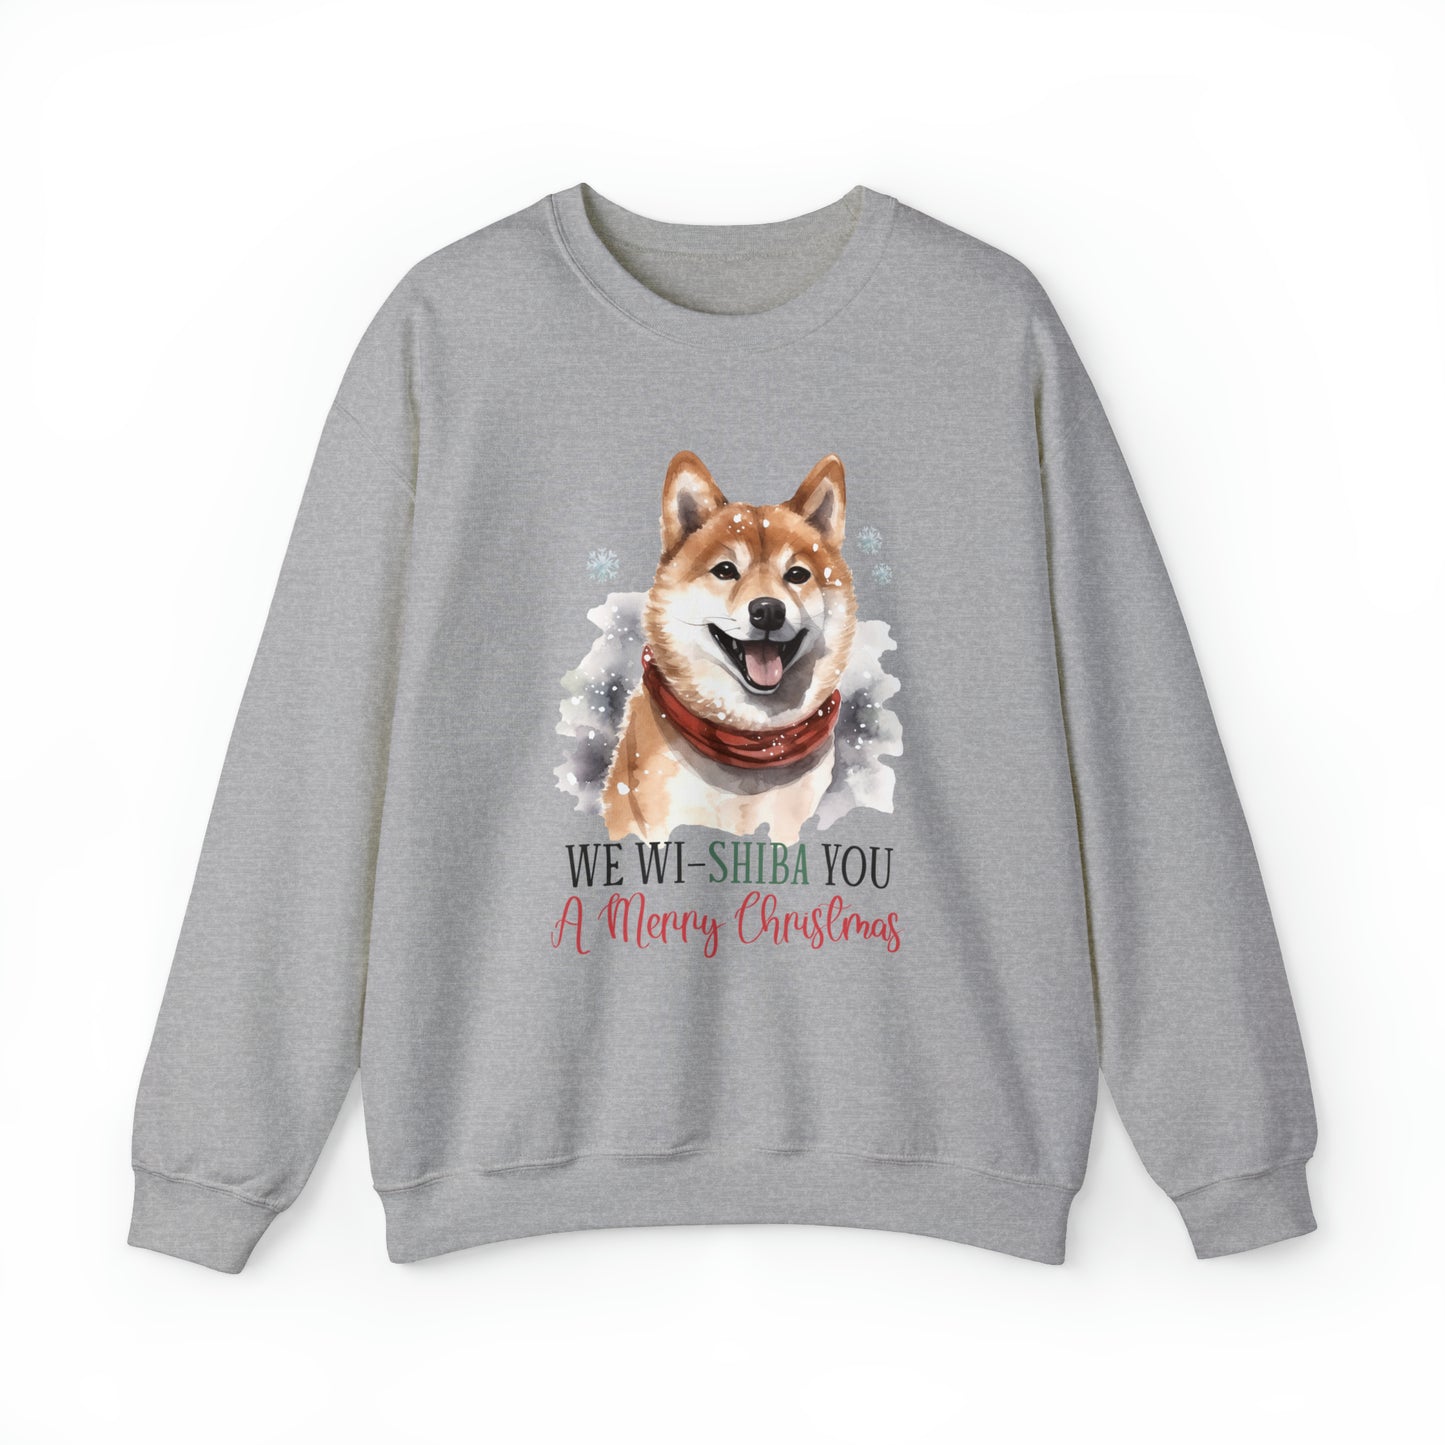 Shiba Inu Dog Christmas Sweatshirt Women's and Men's